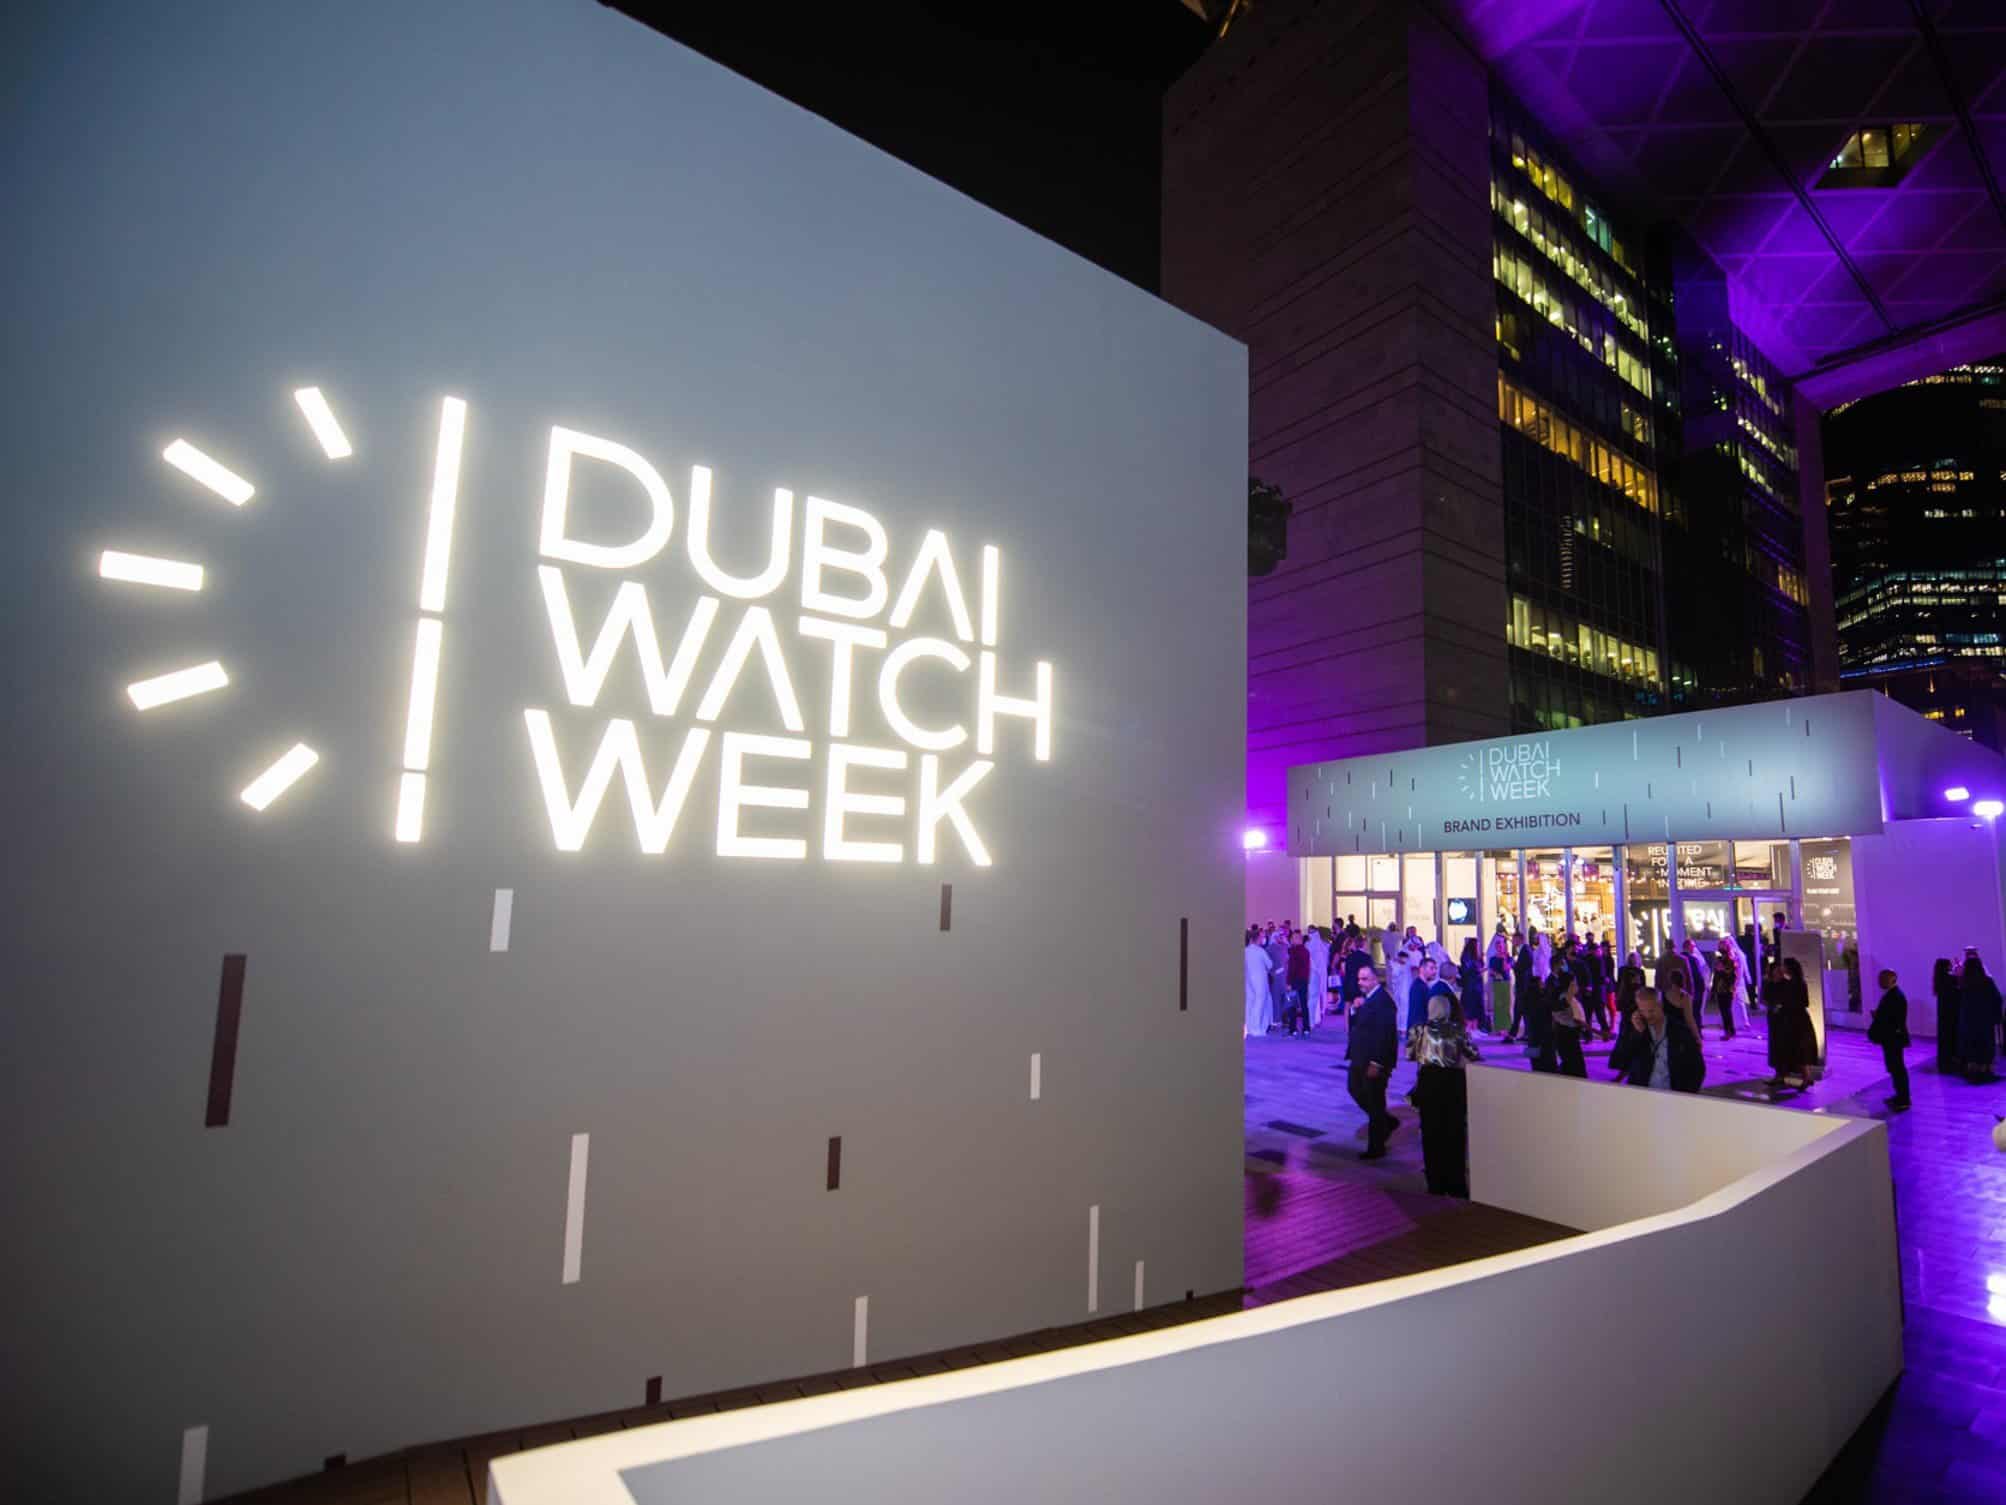 Dubai Watch Week 2023